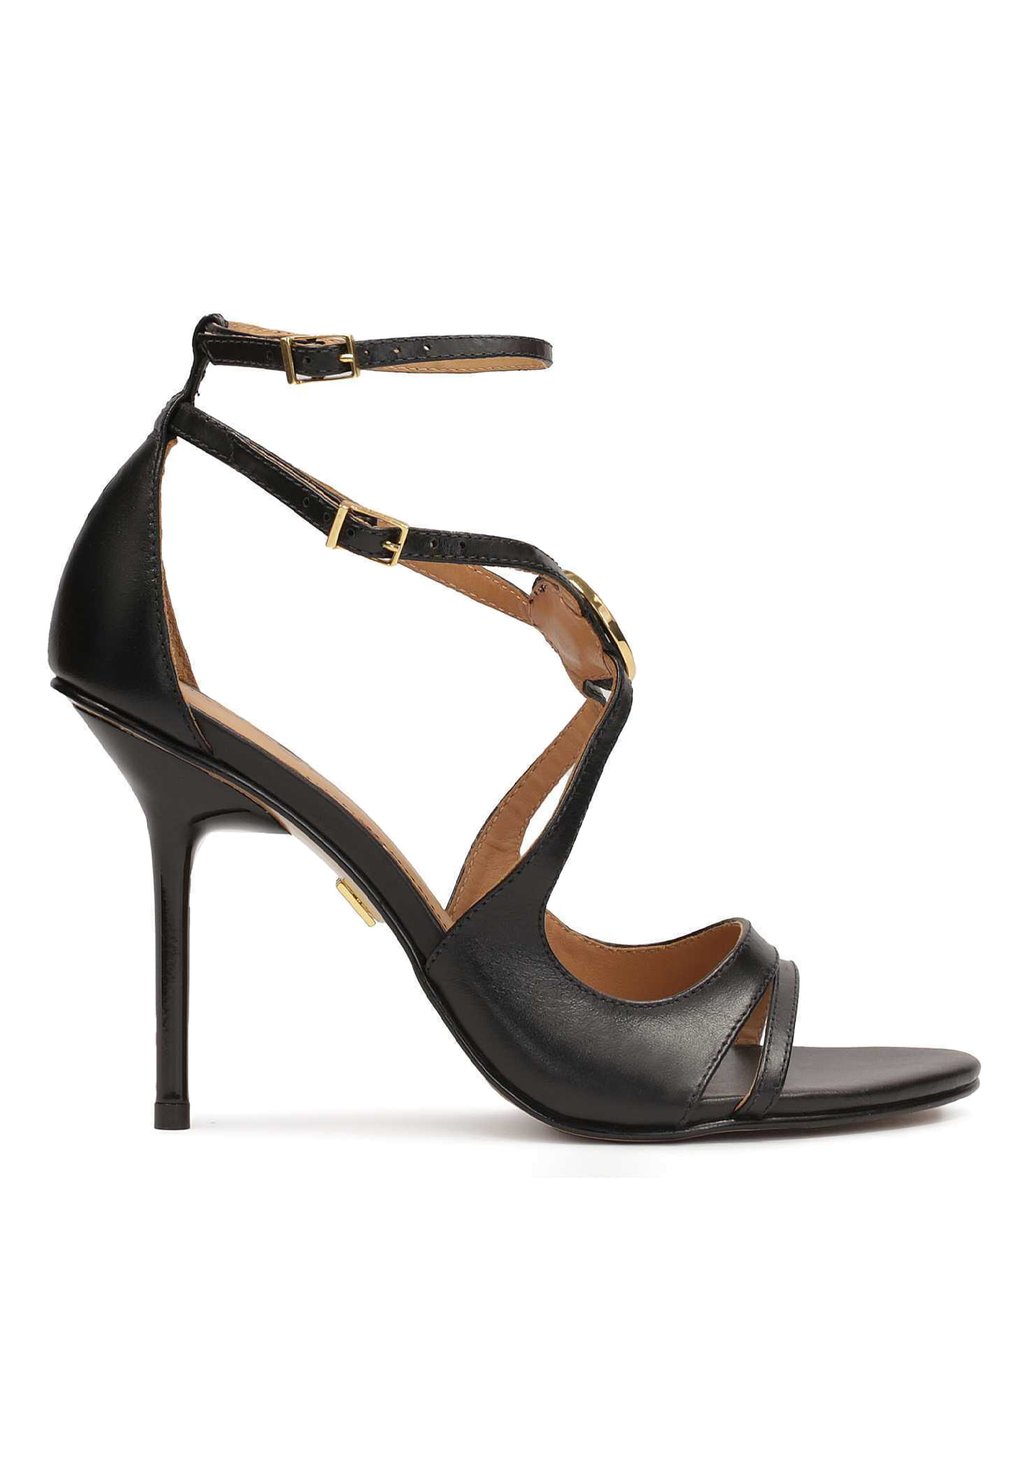 Босоножки на высоком каблуке Kazar, цвет black босоножки на высоком каблуке mood kazar studio цвет mottled black